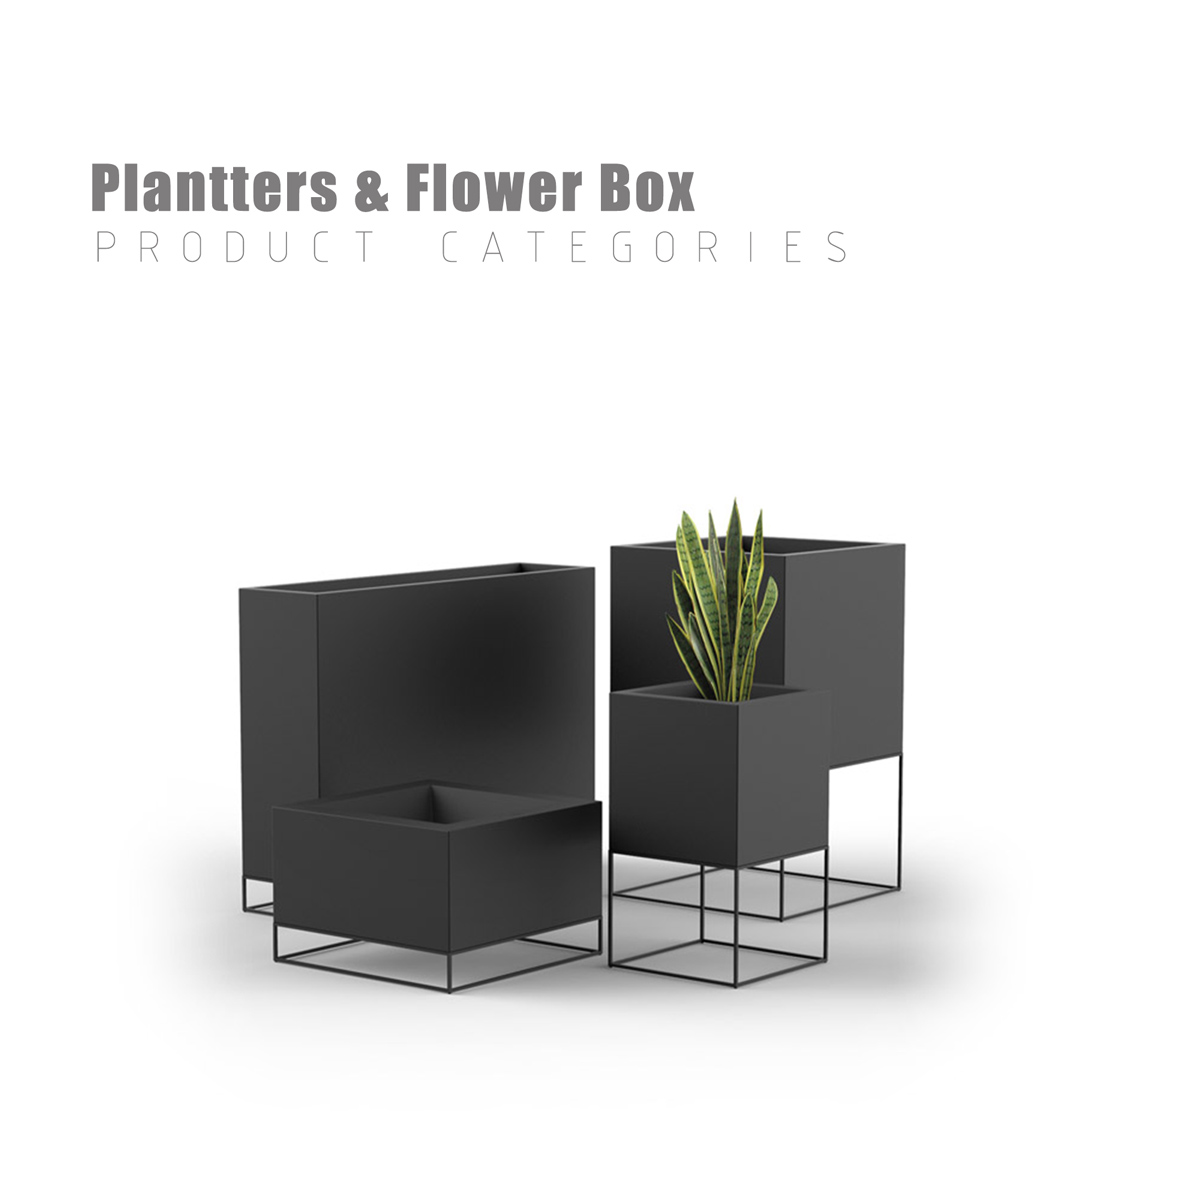 Plantters-&-Flower-Box